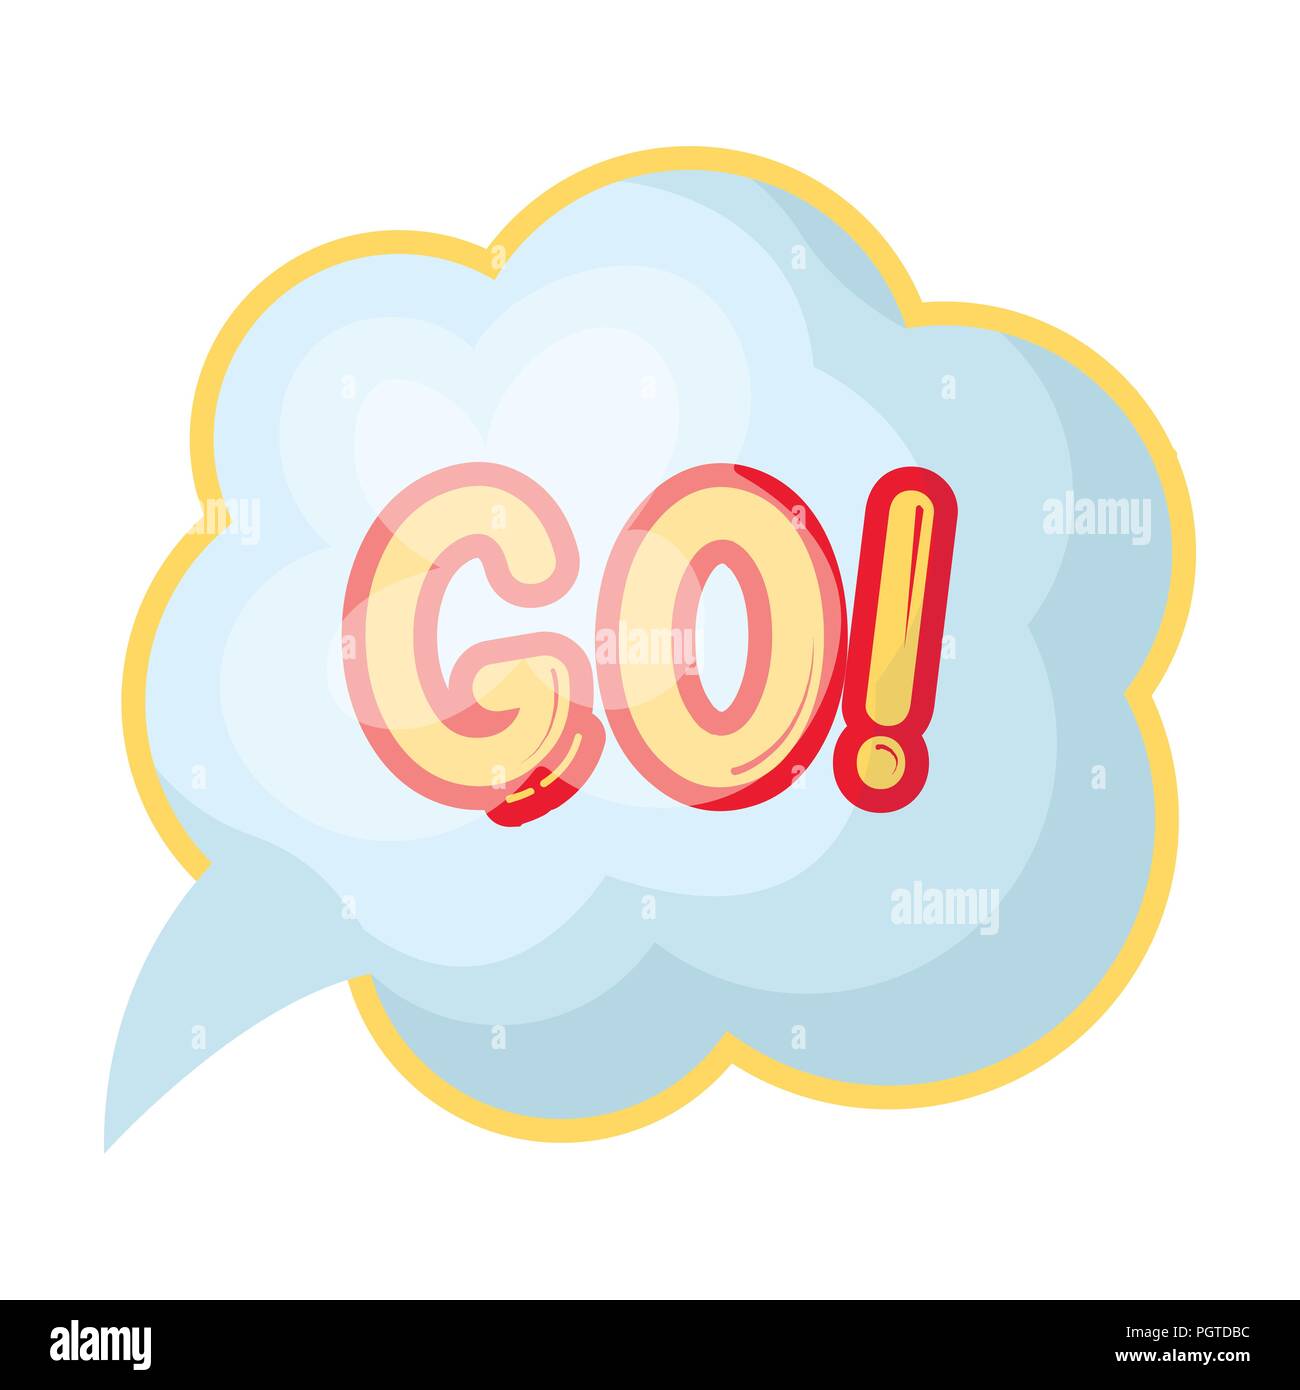 Pokemon Go Logo Stock Illustrations – 72 Pokemon Go Logo Stock